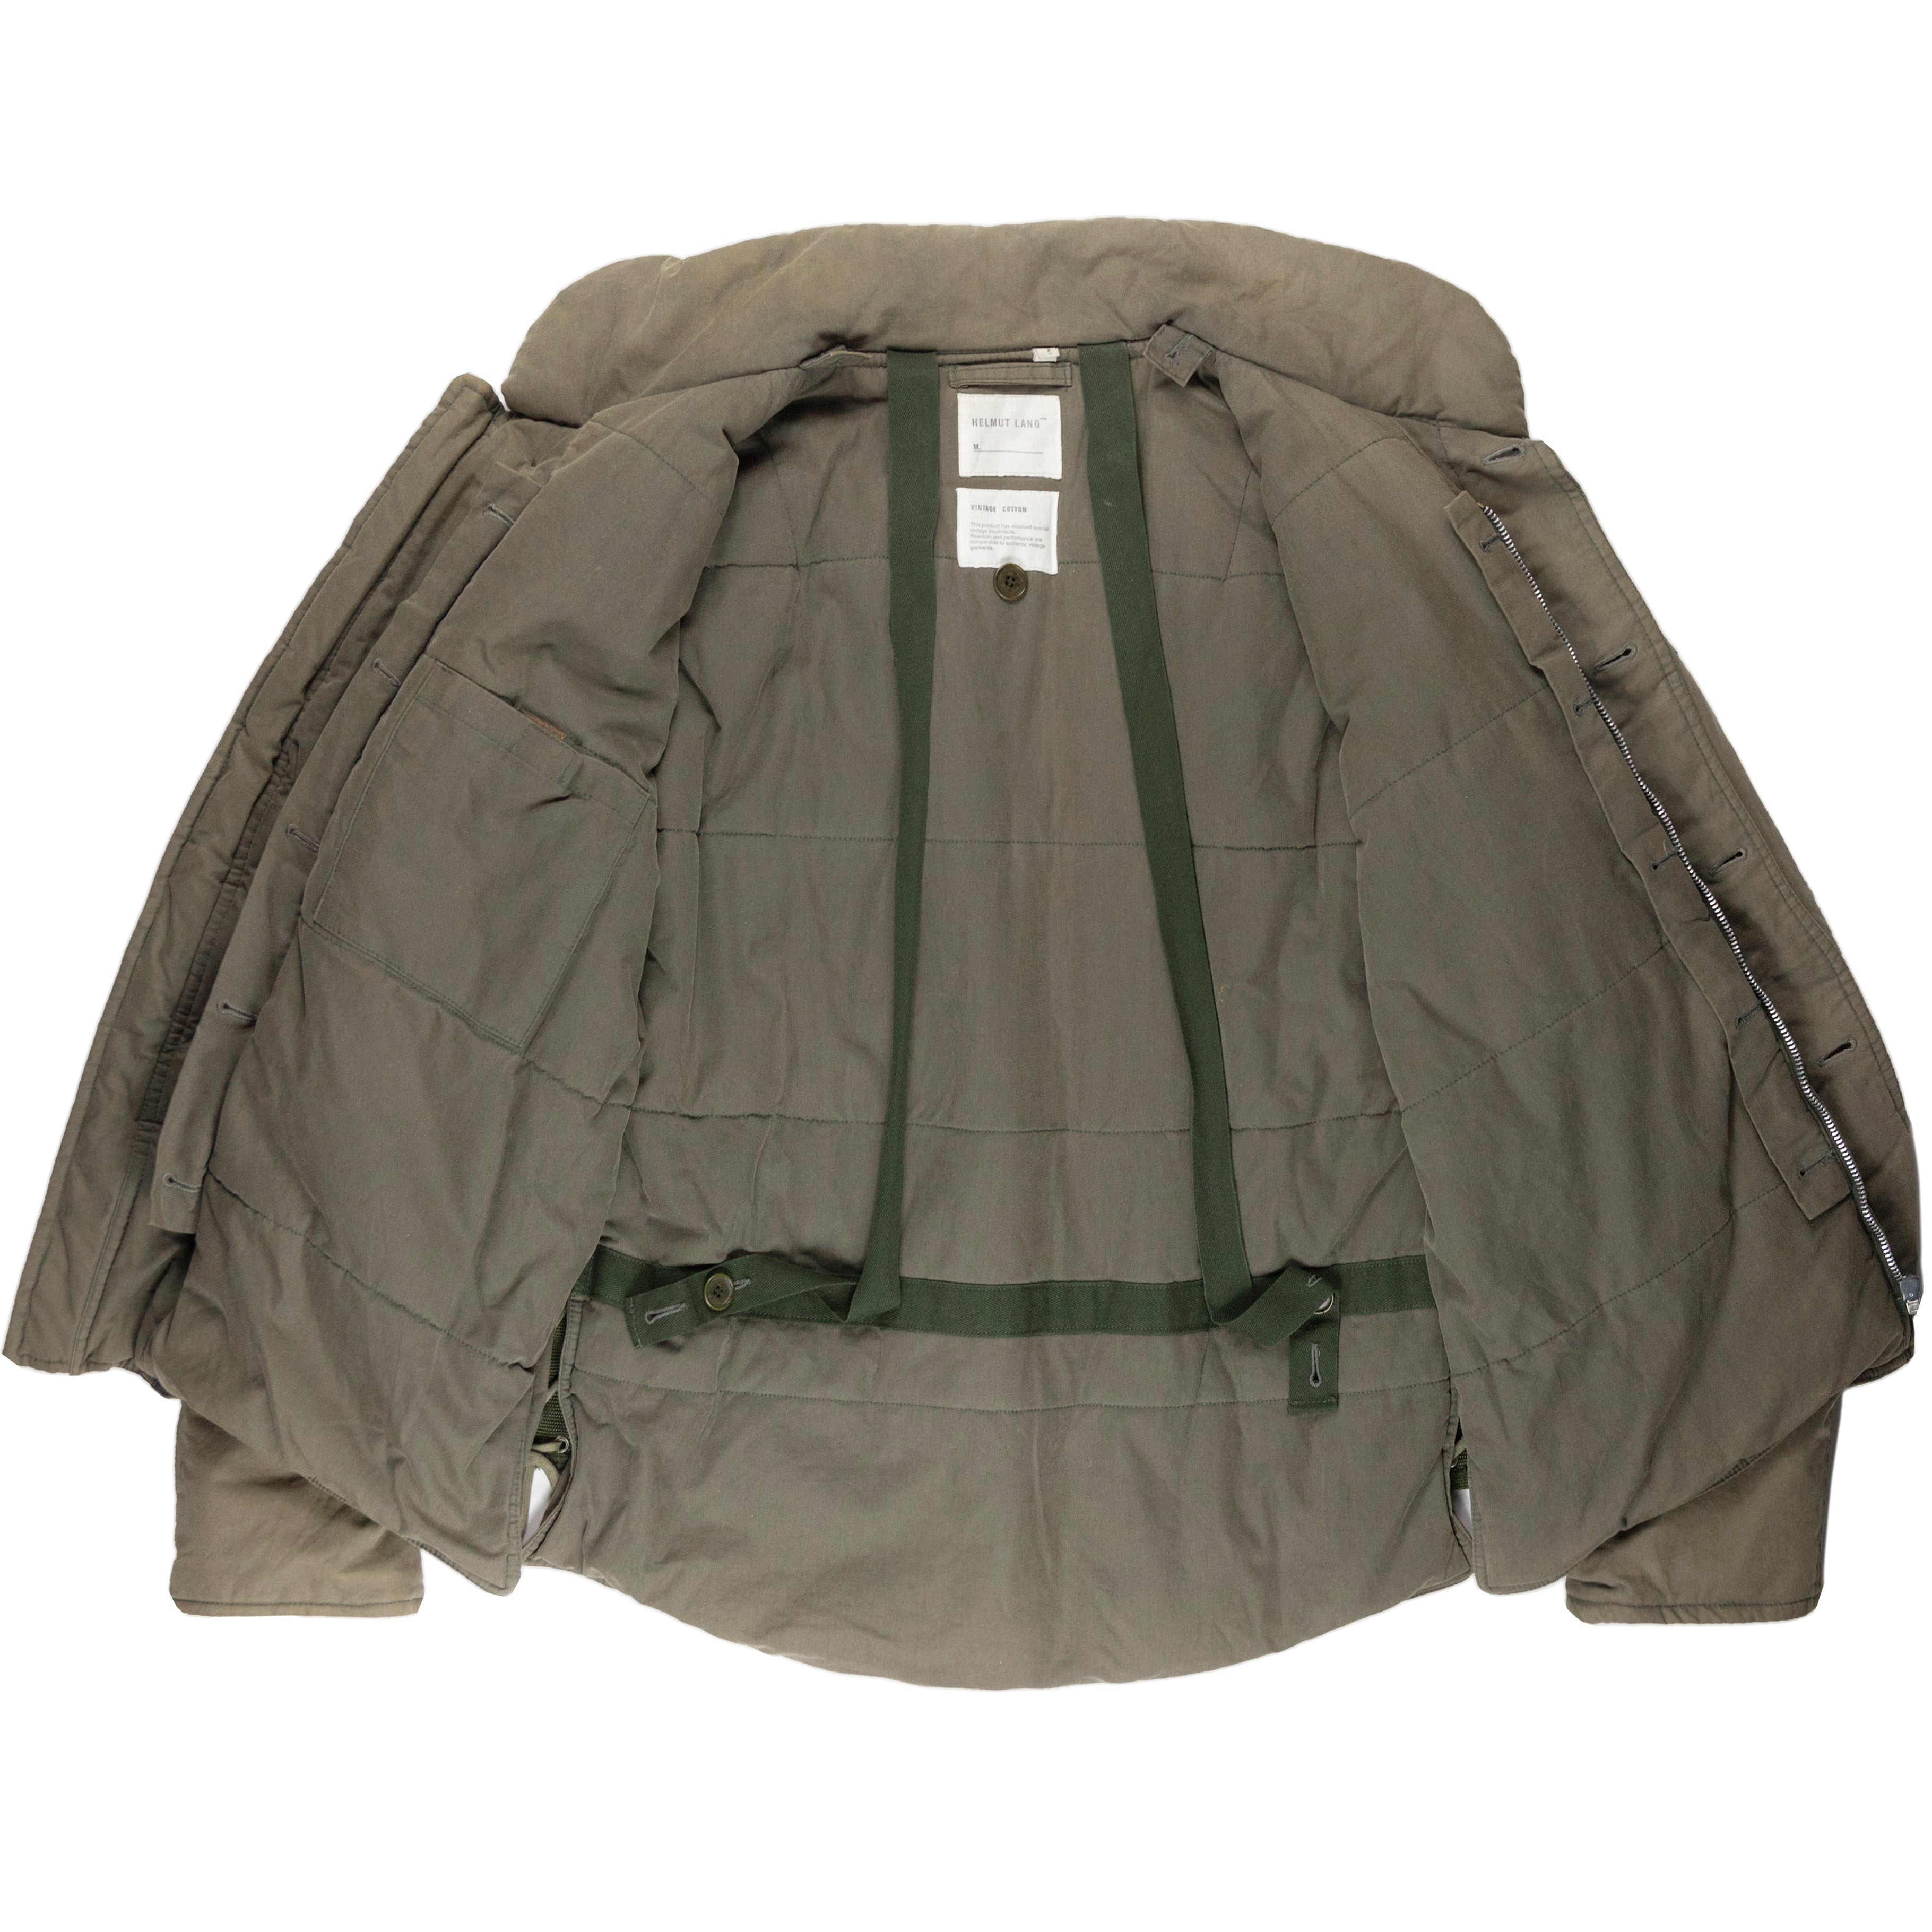 HELMUT LANG 1998aw M69 flake jacket